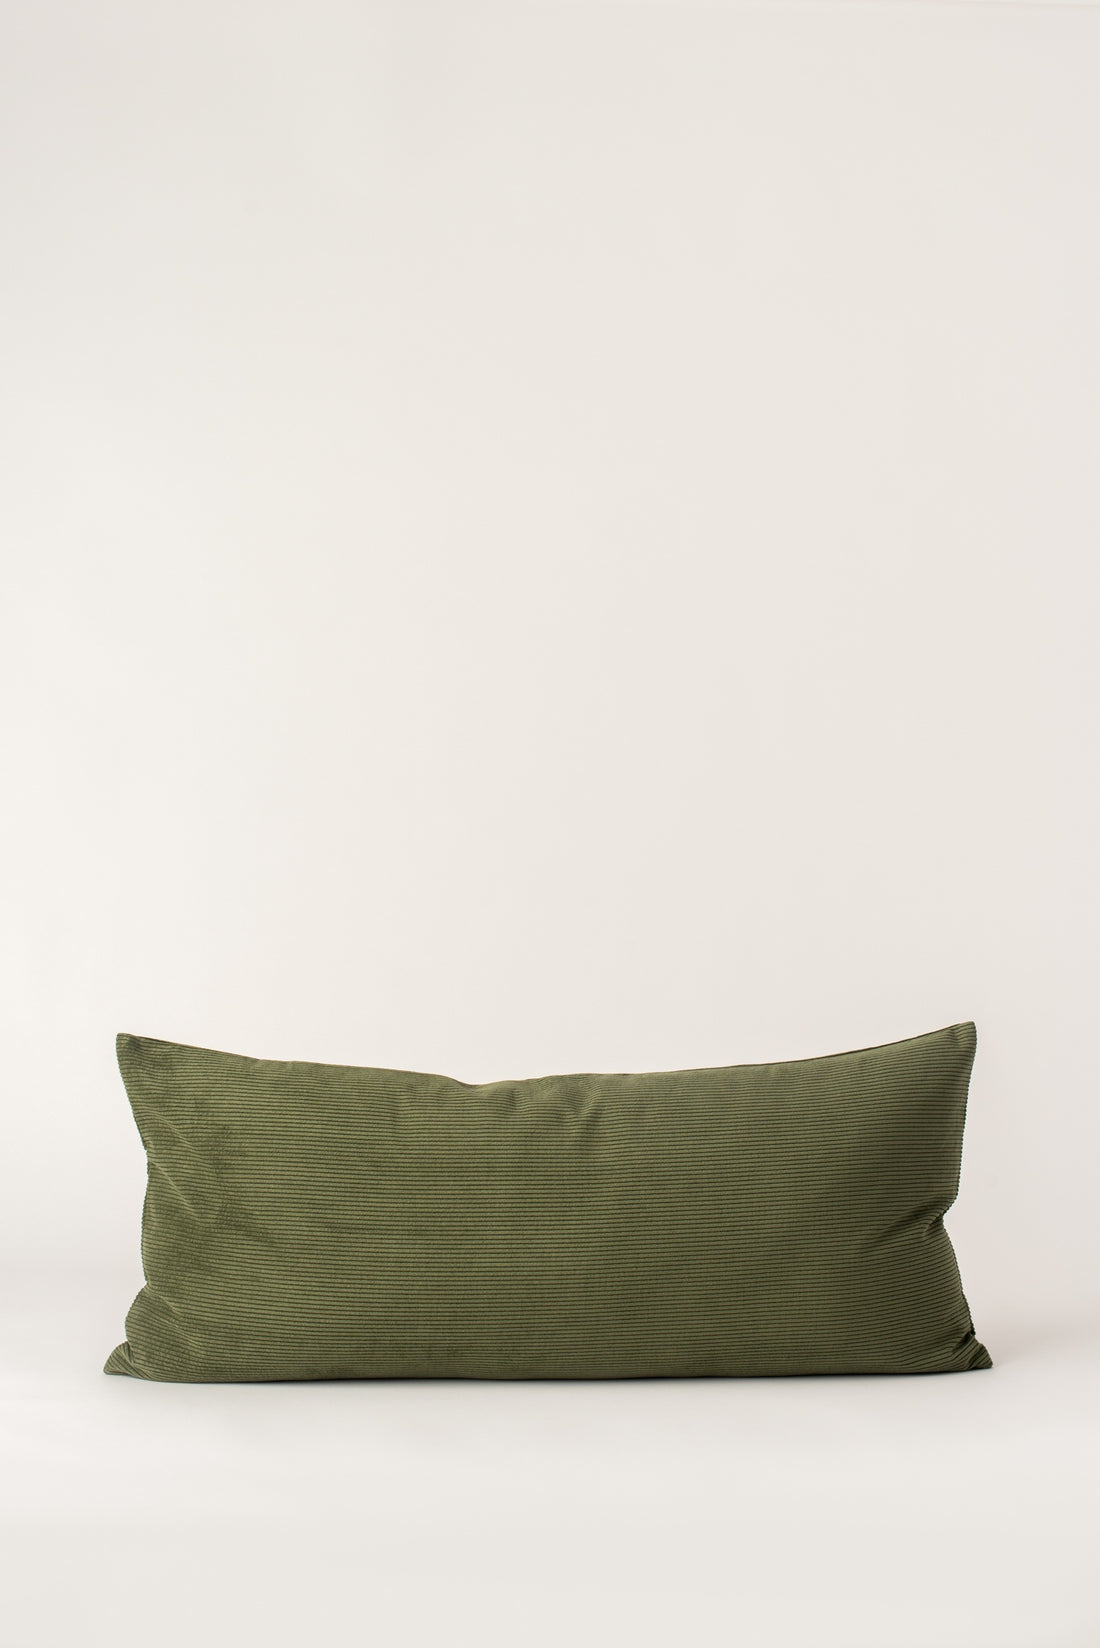 Kindred Cushion - Green Cord Bolster